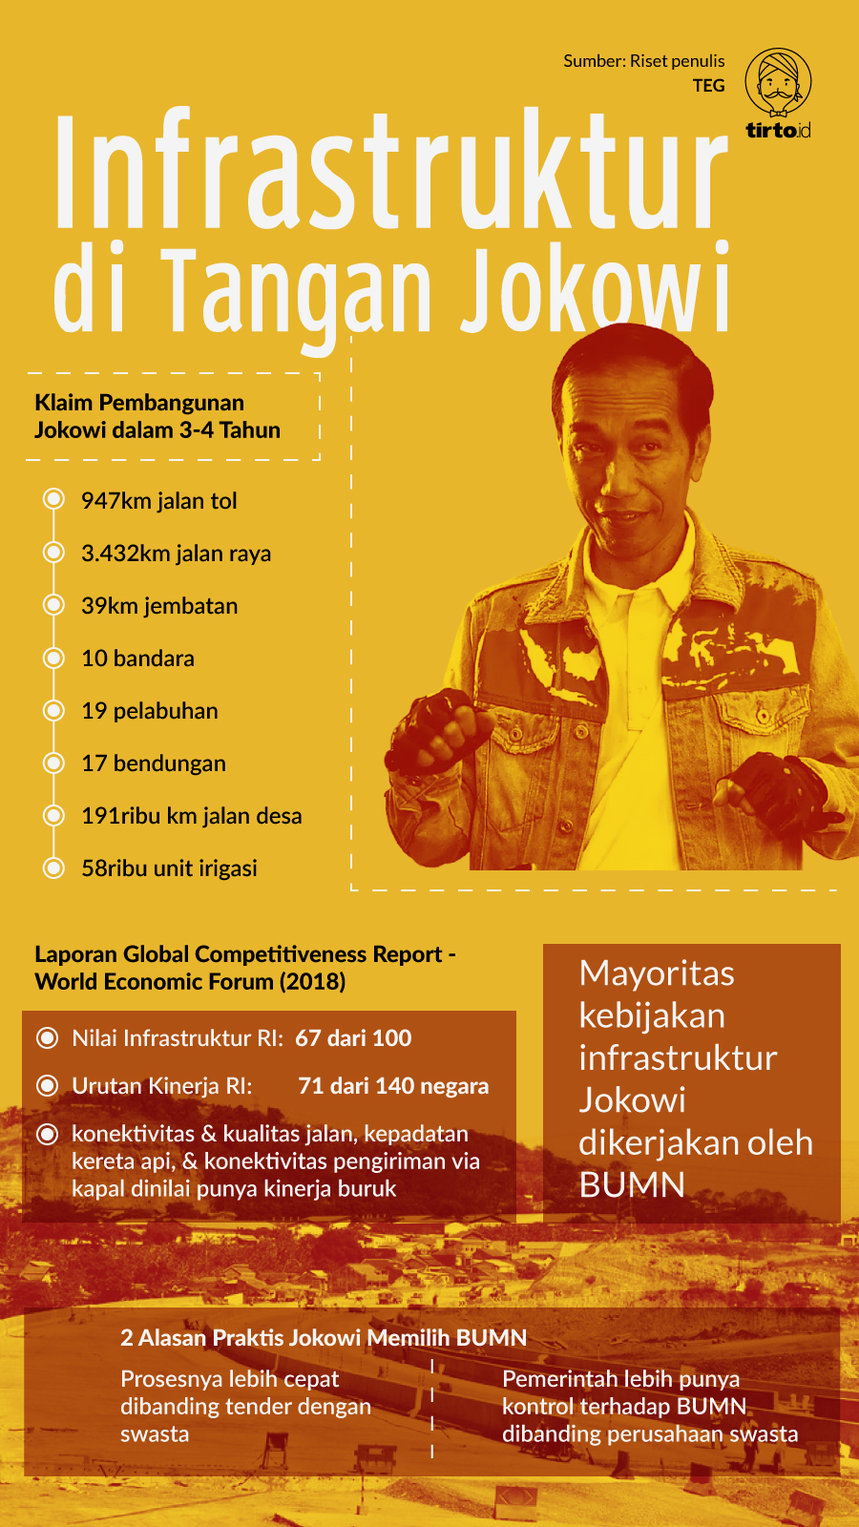 Infografik Infrastruktur di Tangan Jokowi